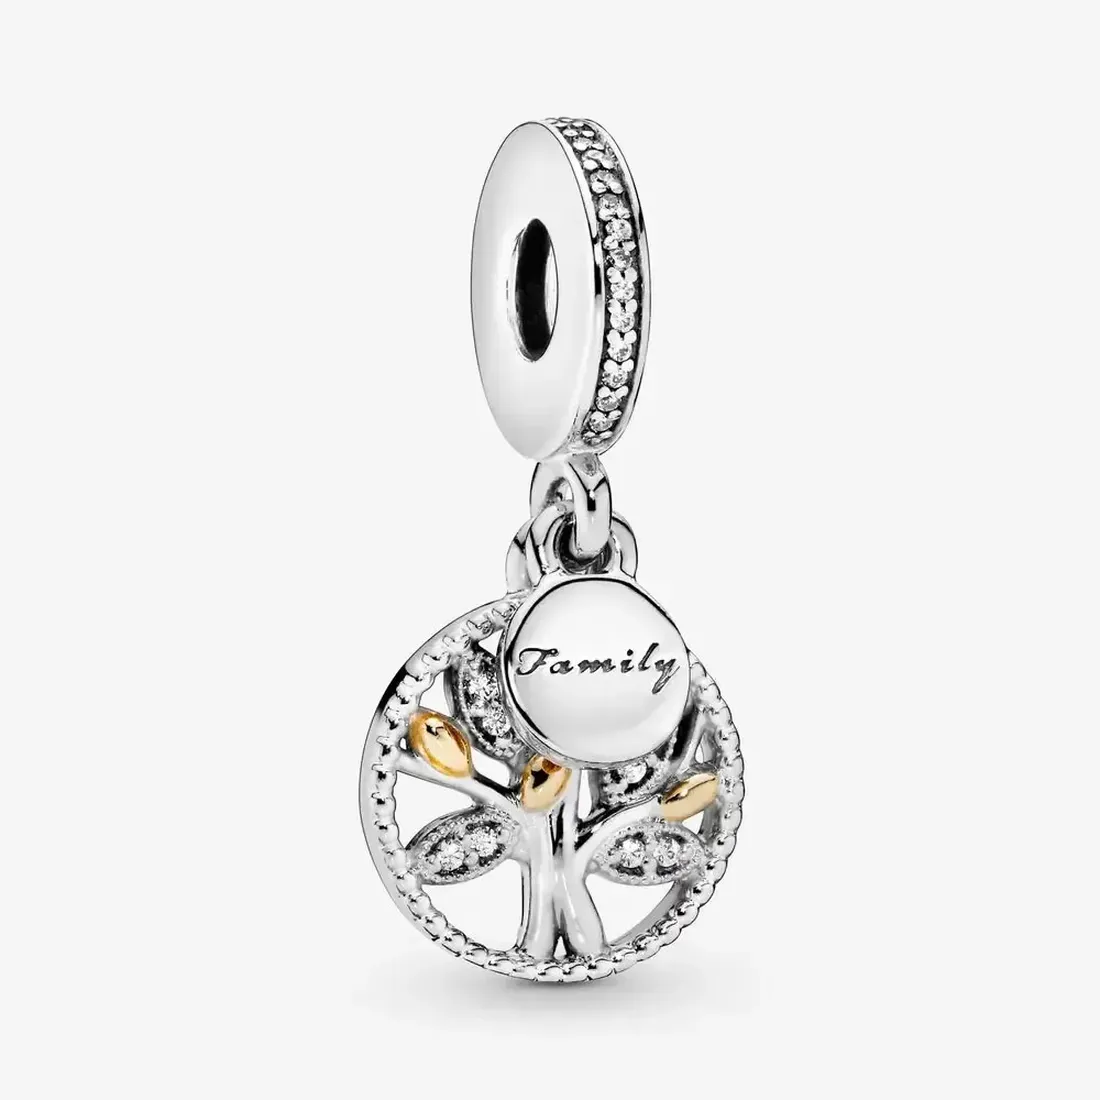 Designer Jewelry 925 Silver Bracelet Charm Bead fit Pandora Sparkling Family Tree Dangle Slide Bracelets Beads European Style Charms Beaded Murano